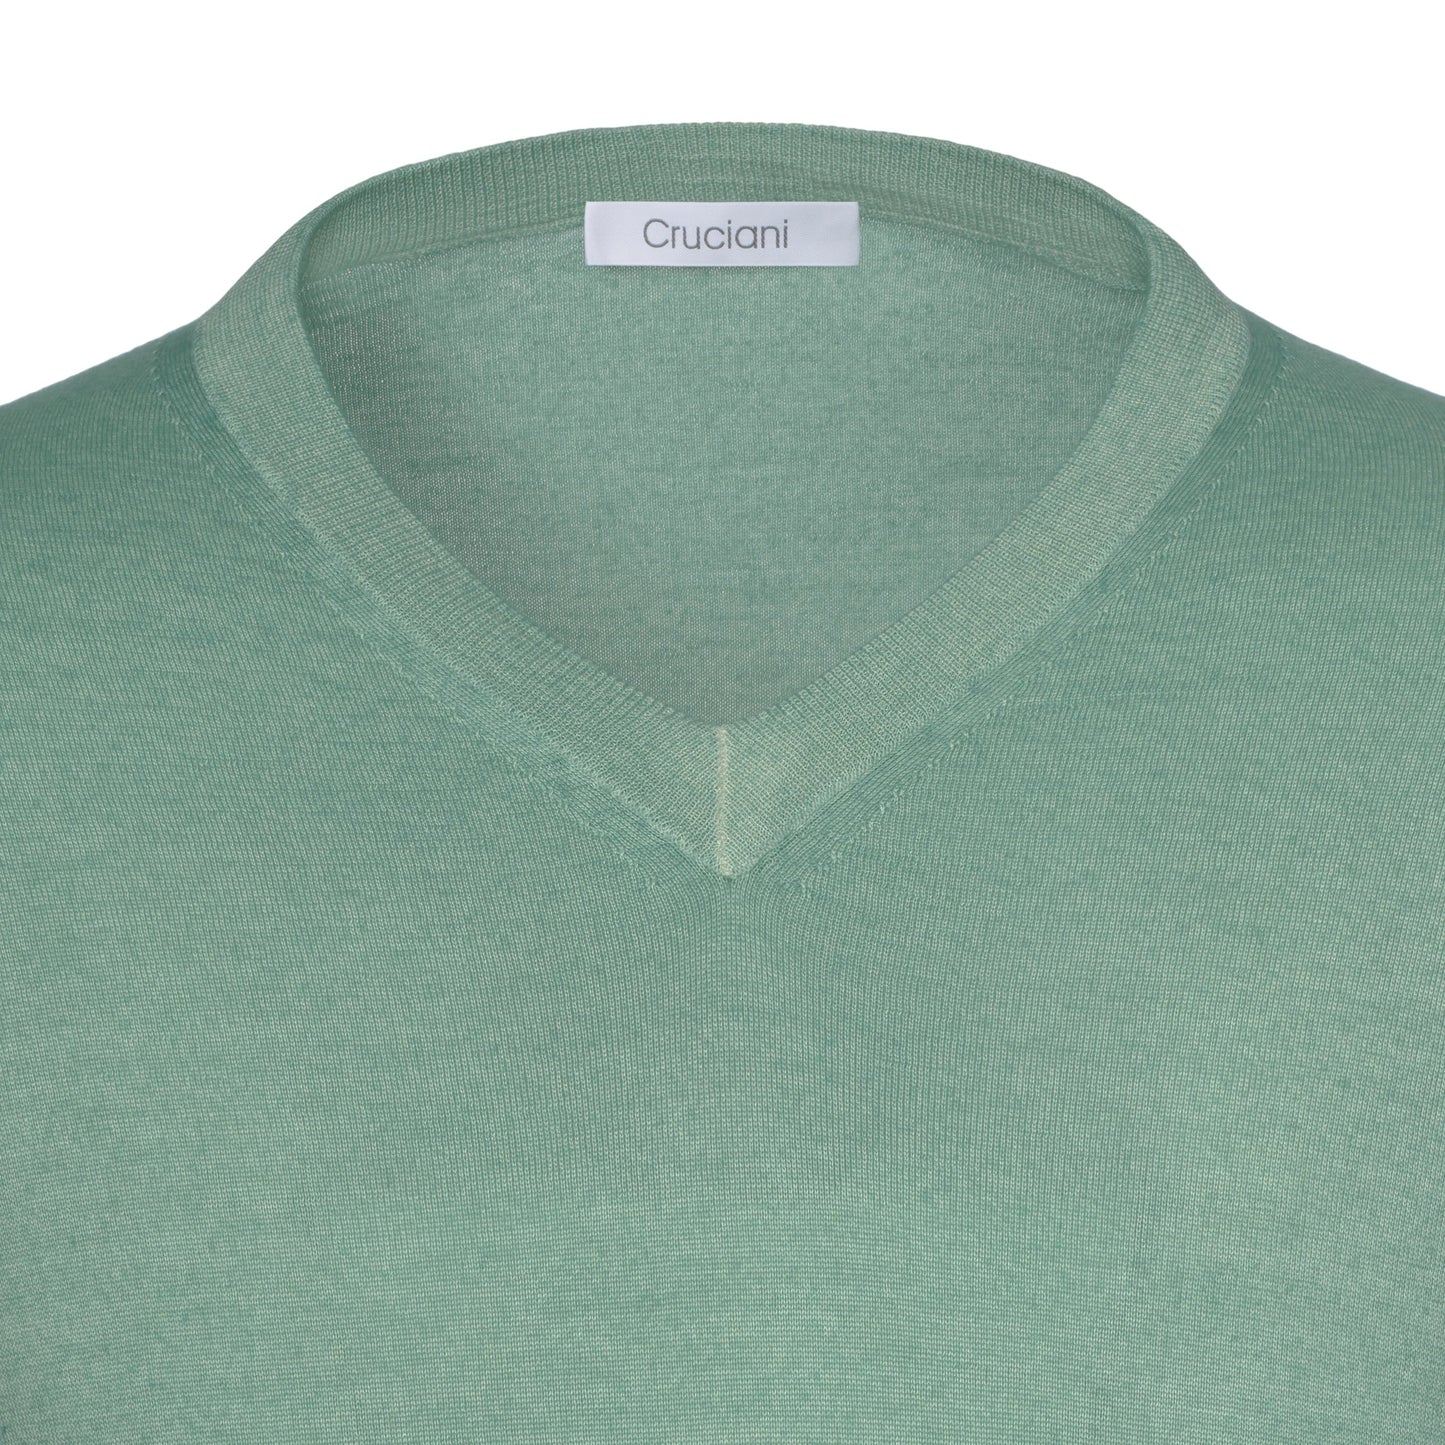 Cruciani Cashmere and Silk V - Neck Sweater in Grass Green - SARTALE